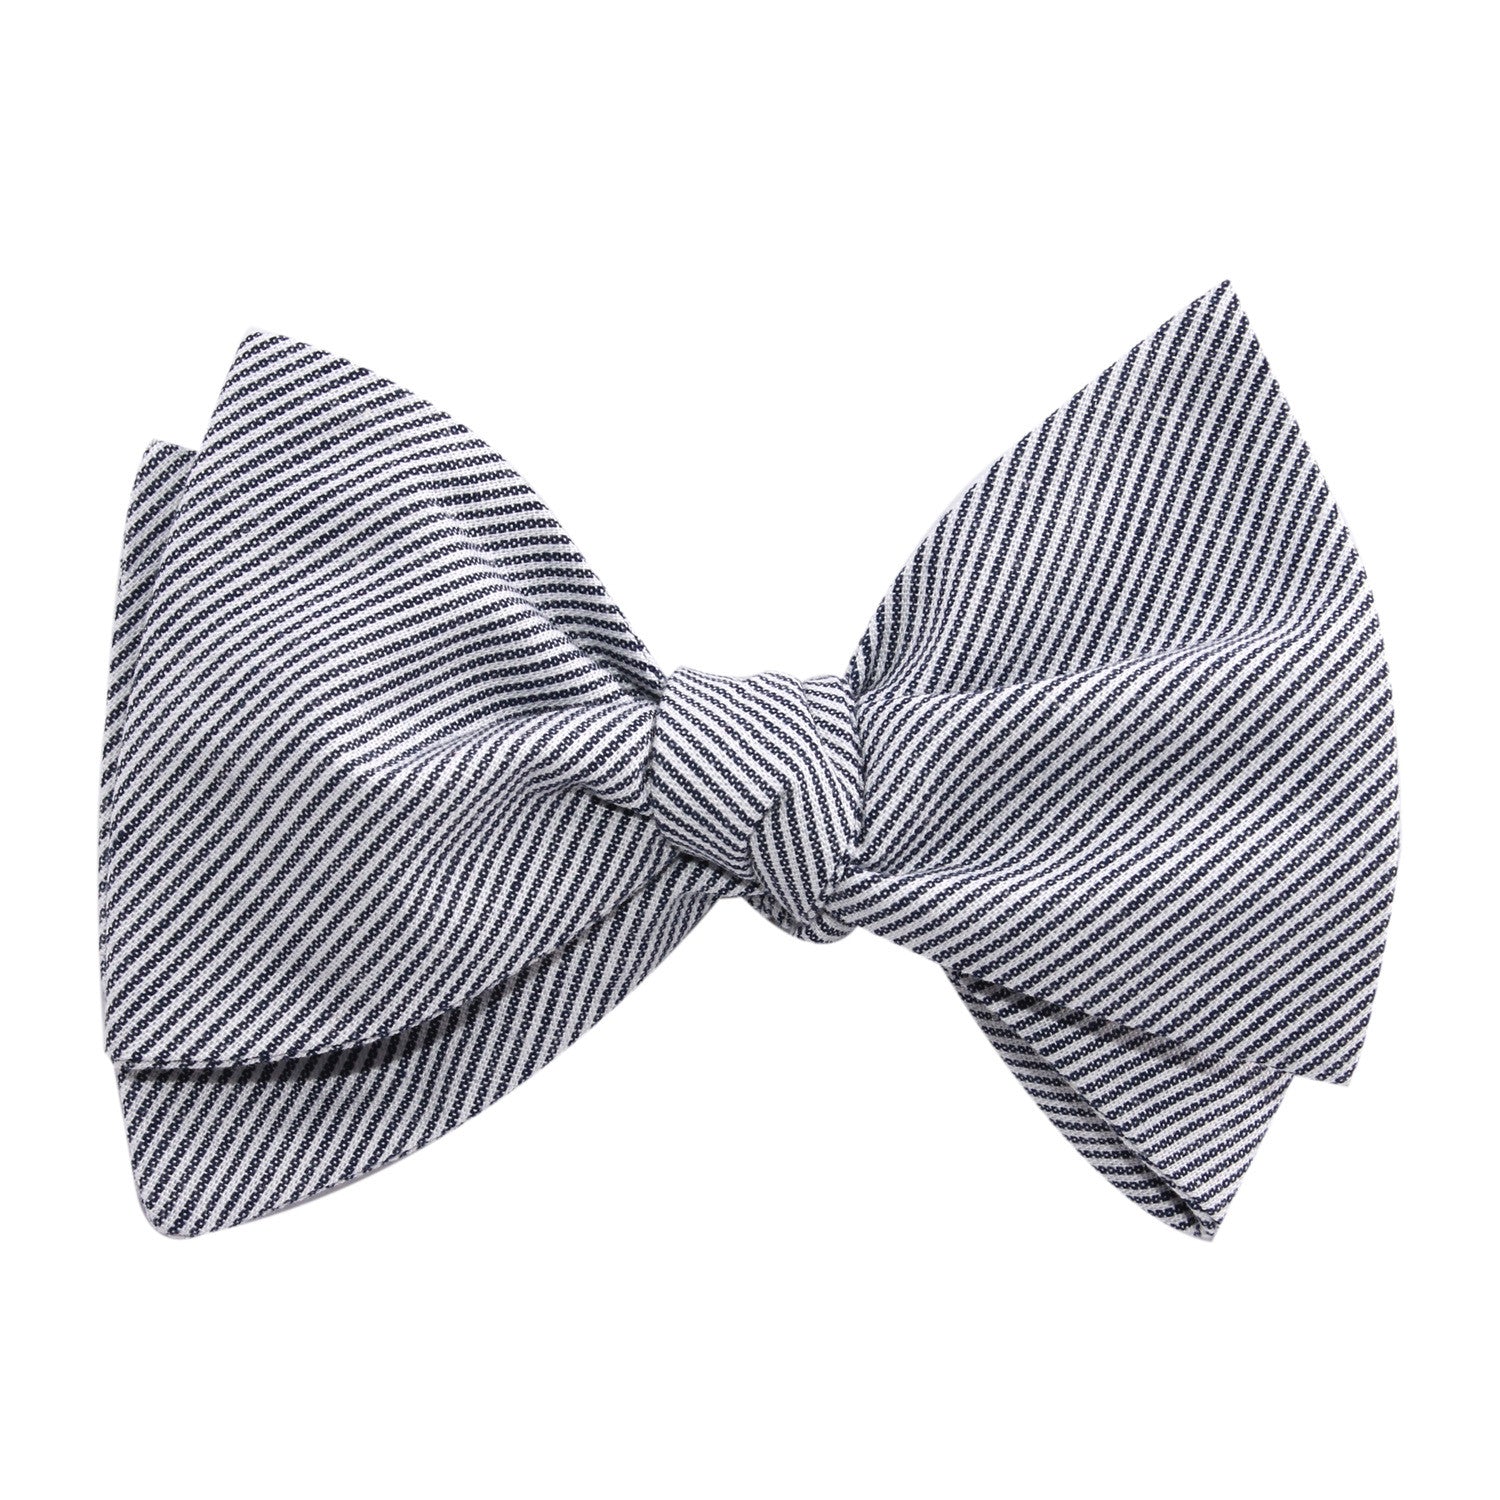 Black and White Pinstripe Cotton Self Tie Bow Tie | Mens Untied Bowtie ...